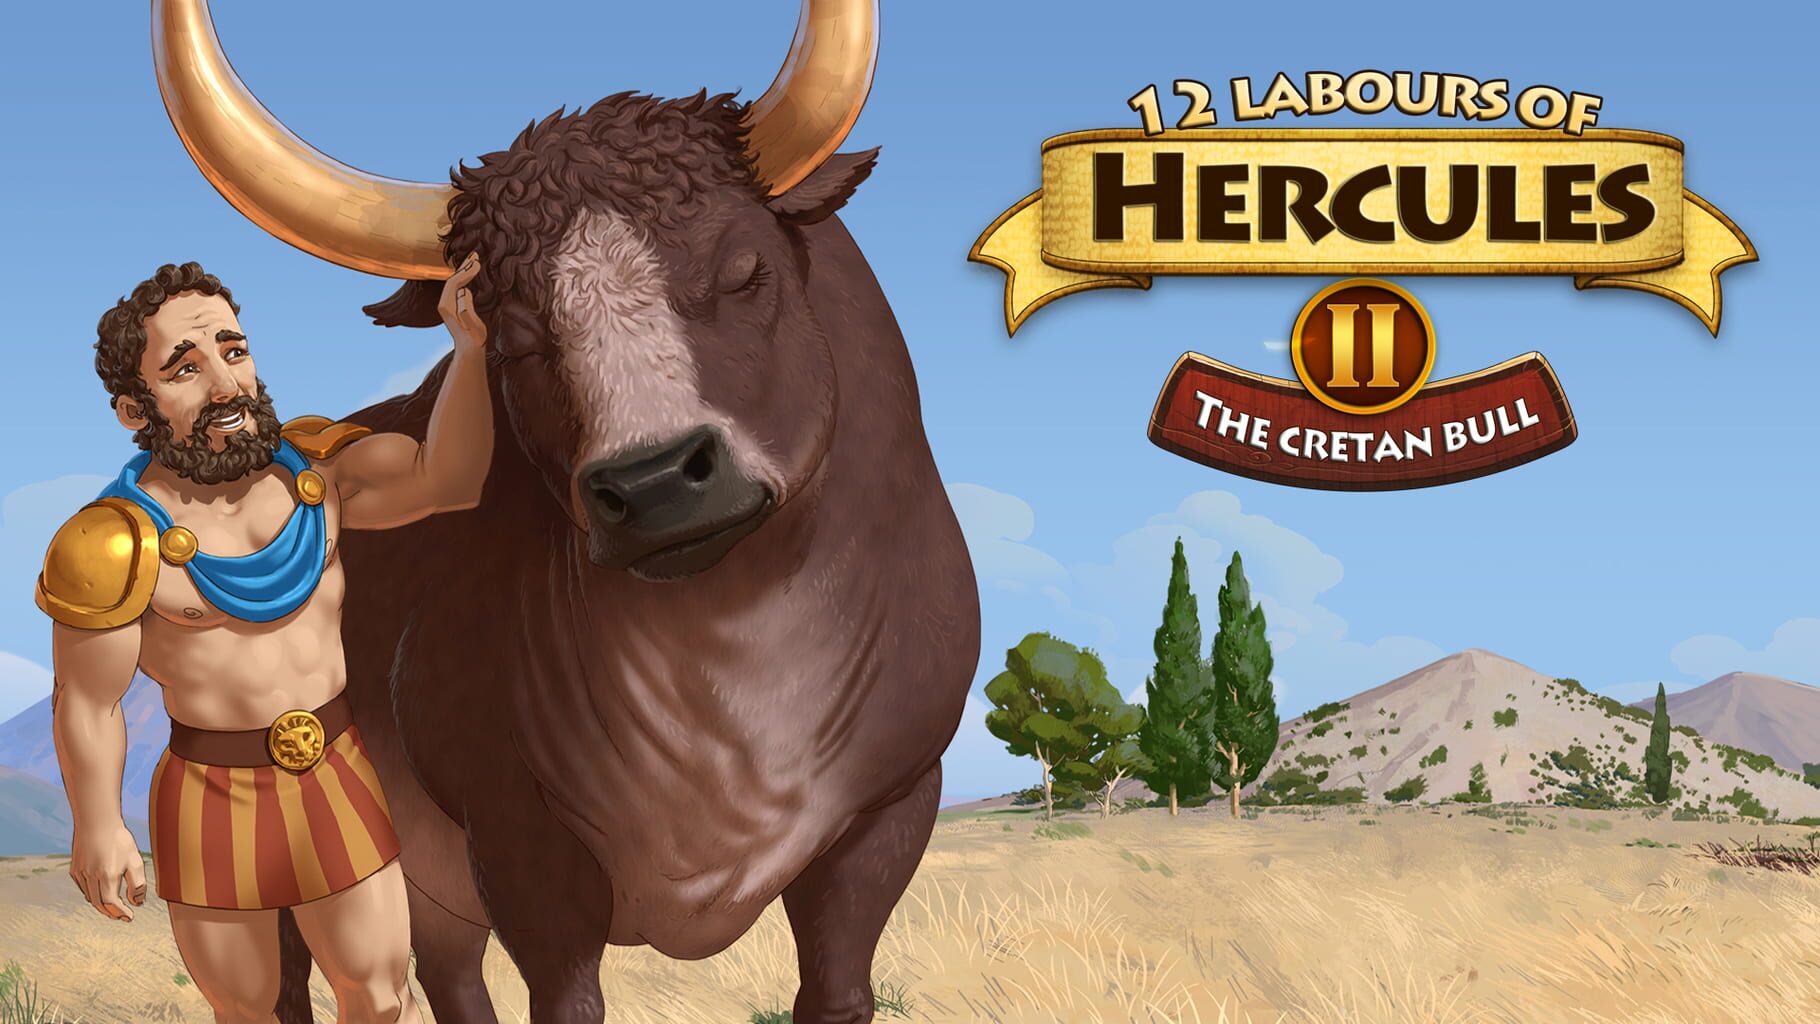 12 Labours of Hercules II: The Cretan Bull artwork